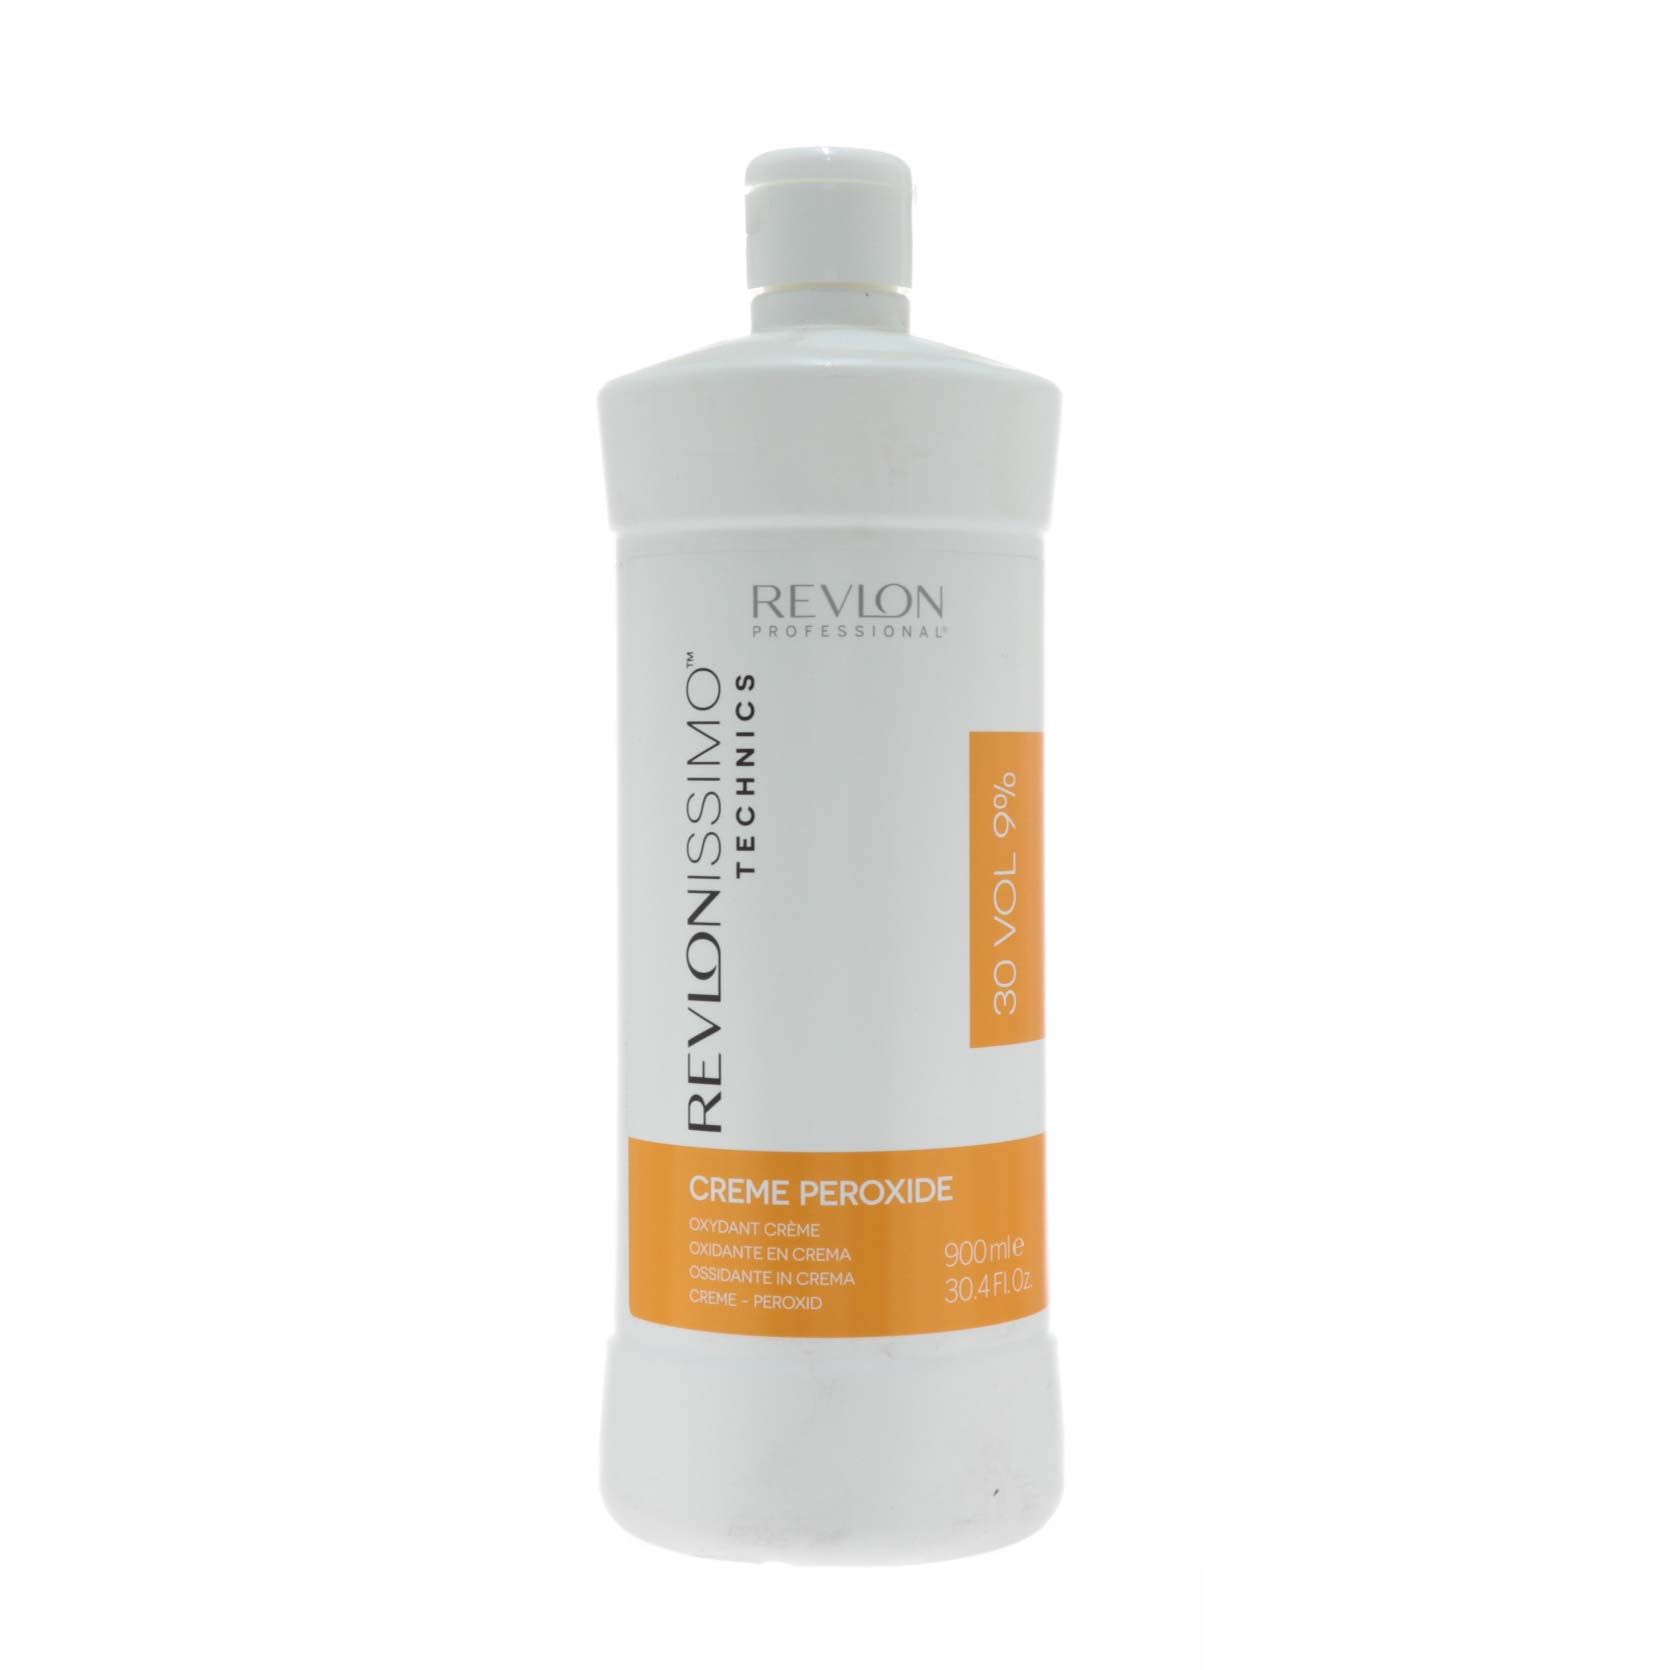 Проявитель Revlon Professional Creme Peroxide 9% 900 мл проявитель selective professional colorevo oxy 3% 1 л